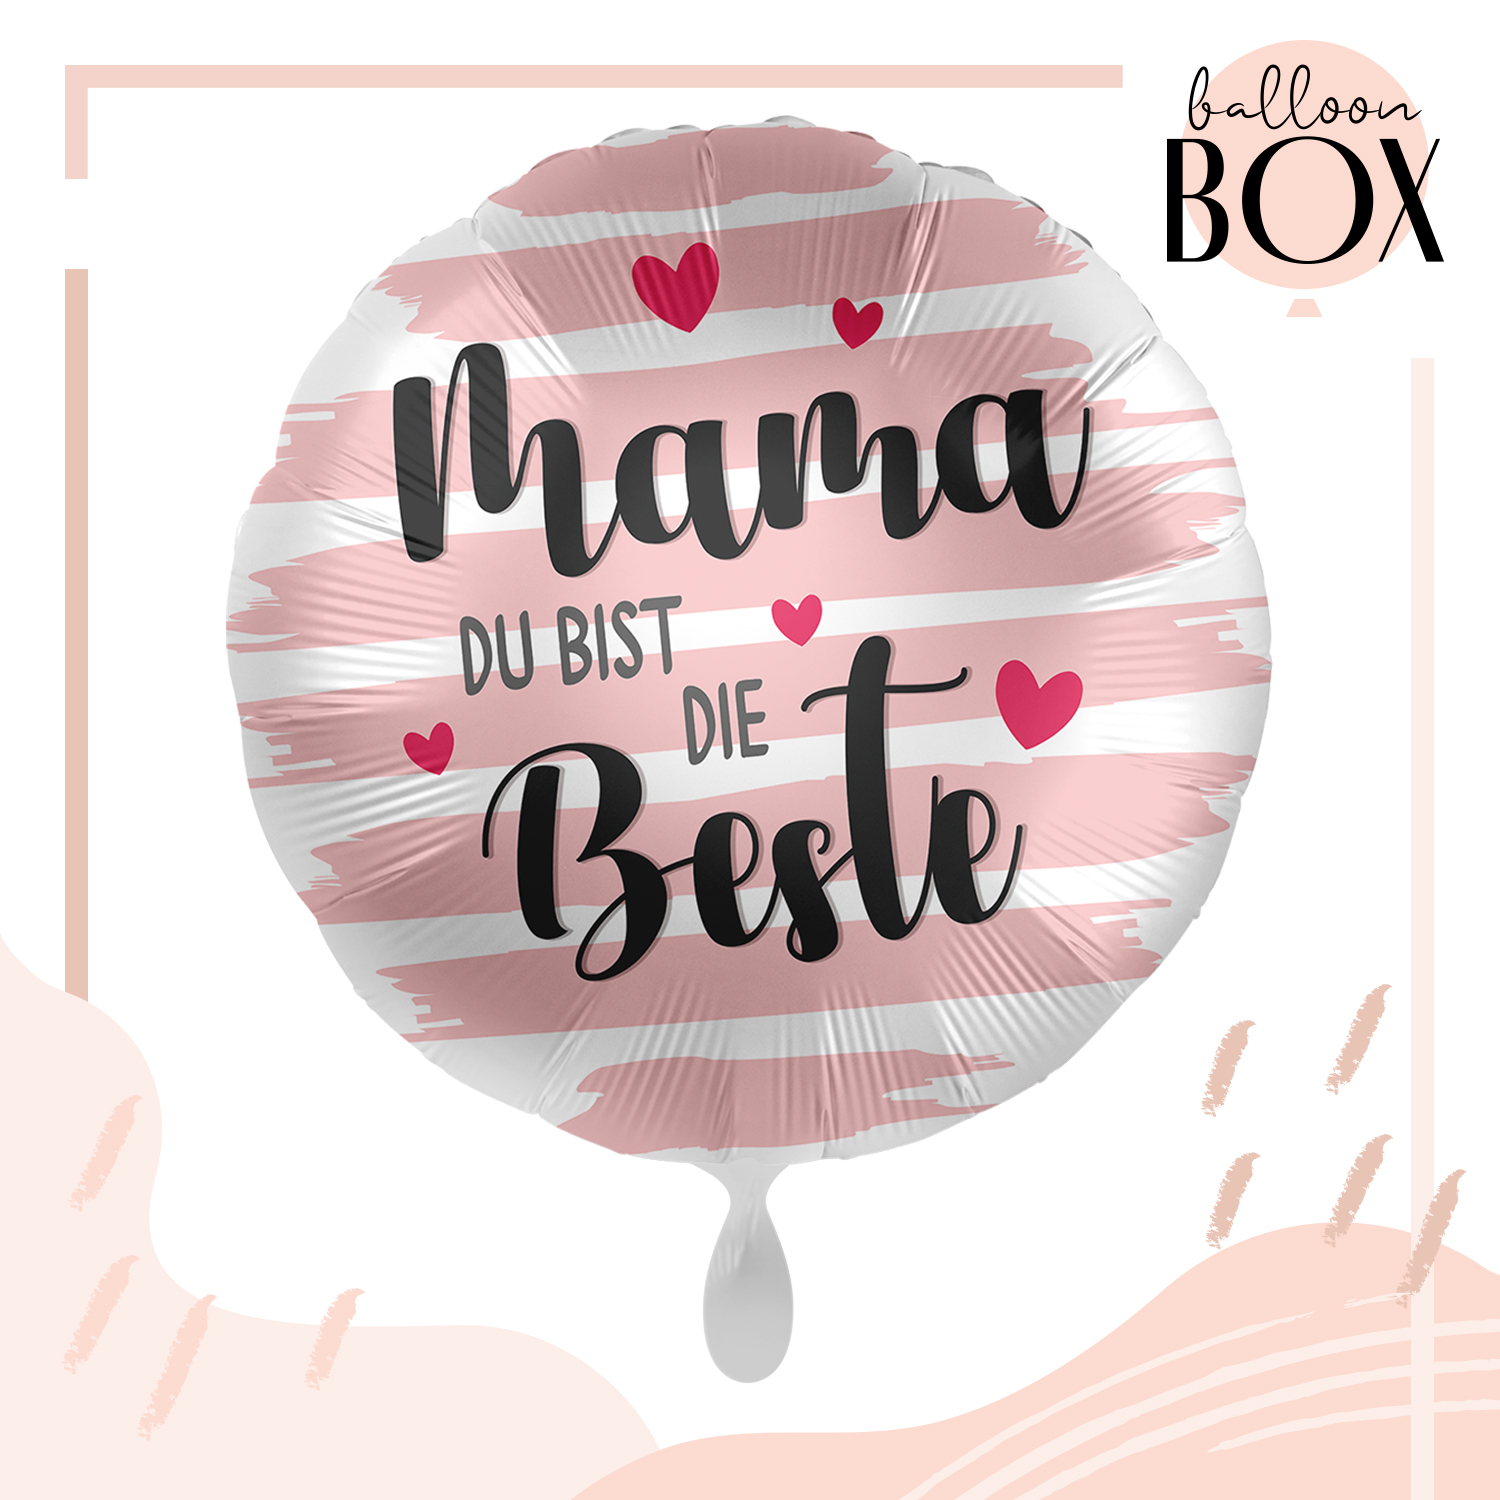 Heliumballon in a Box - Mama ist wunderbar